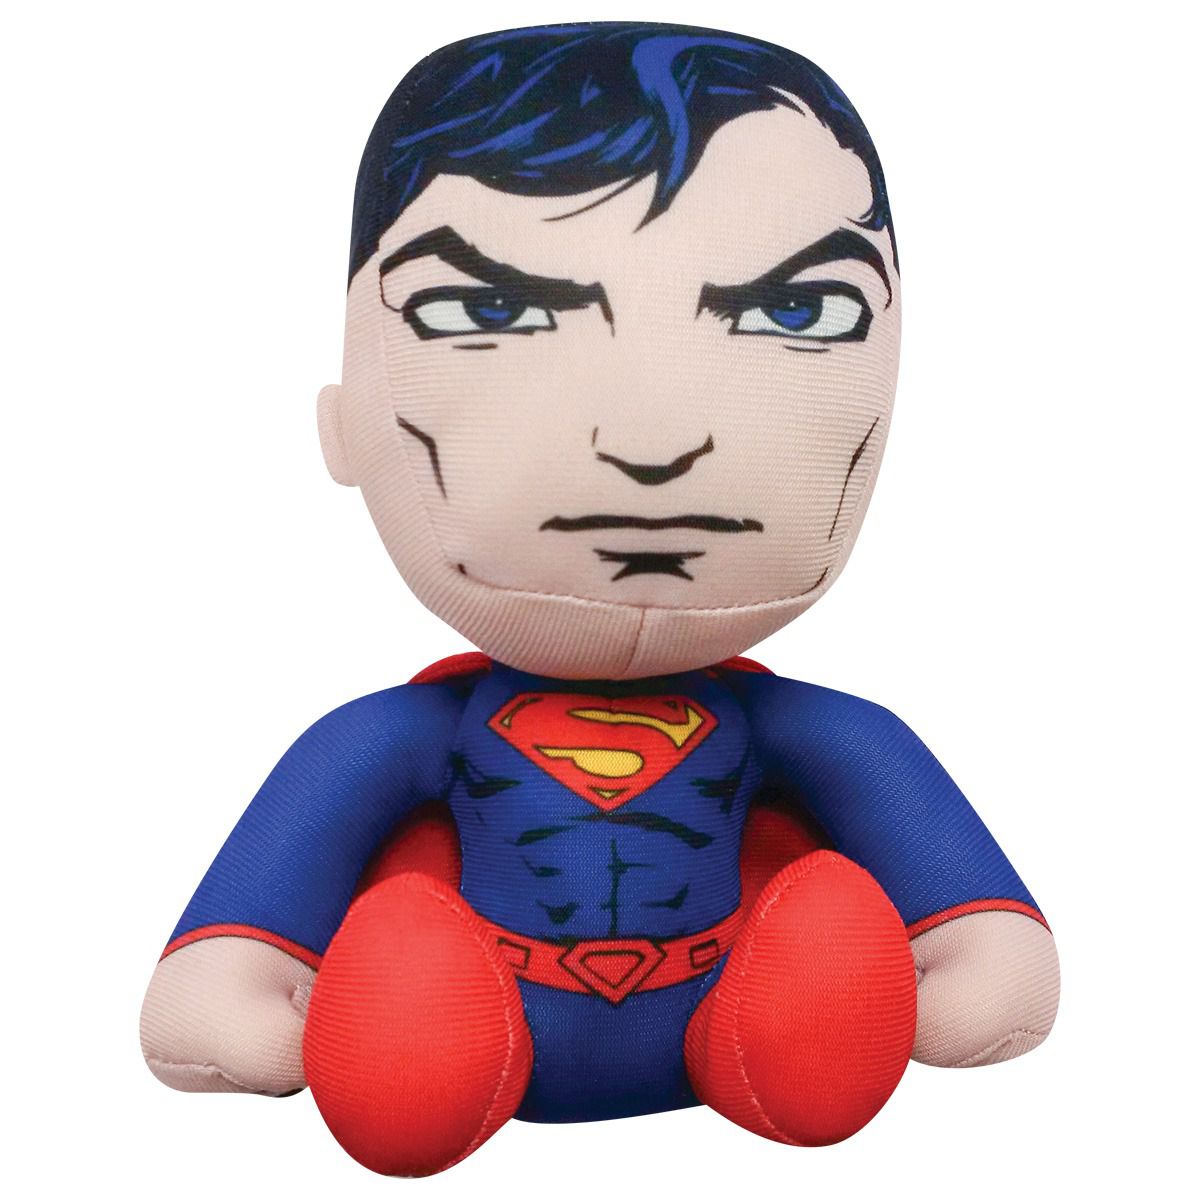 Pelúcia Super Hero: Super-Homem (Superman) - Liga da Justiça (Justice League) - DTC